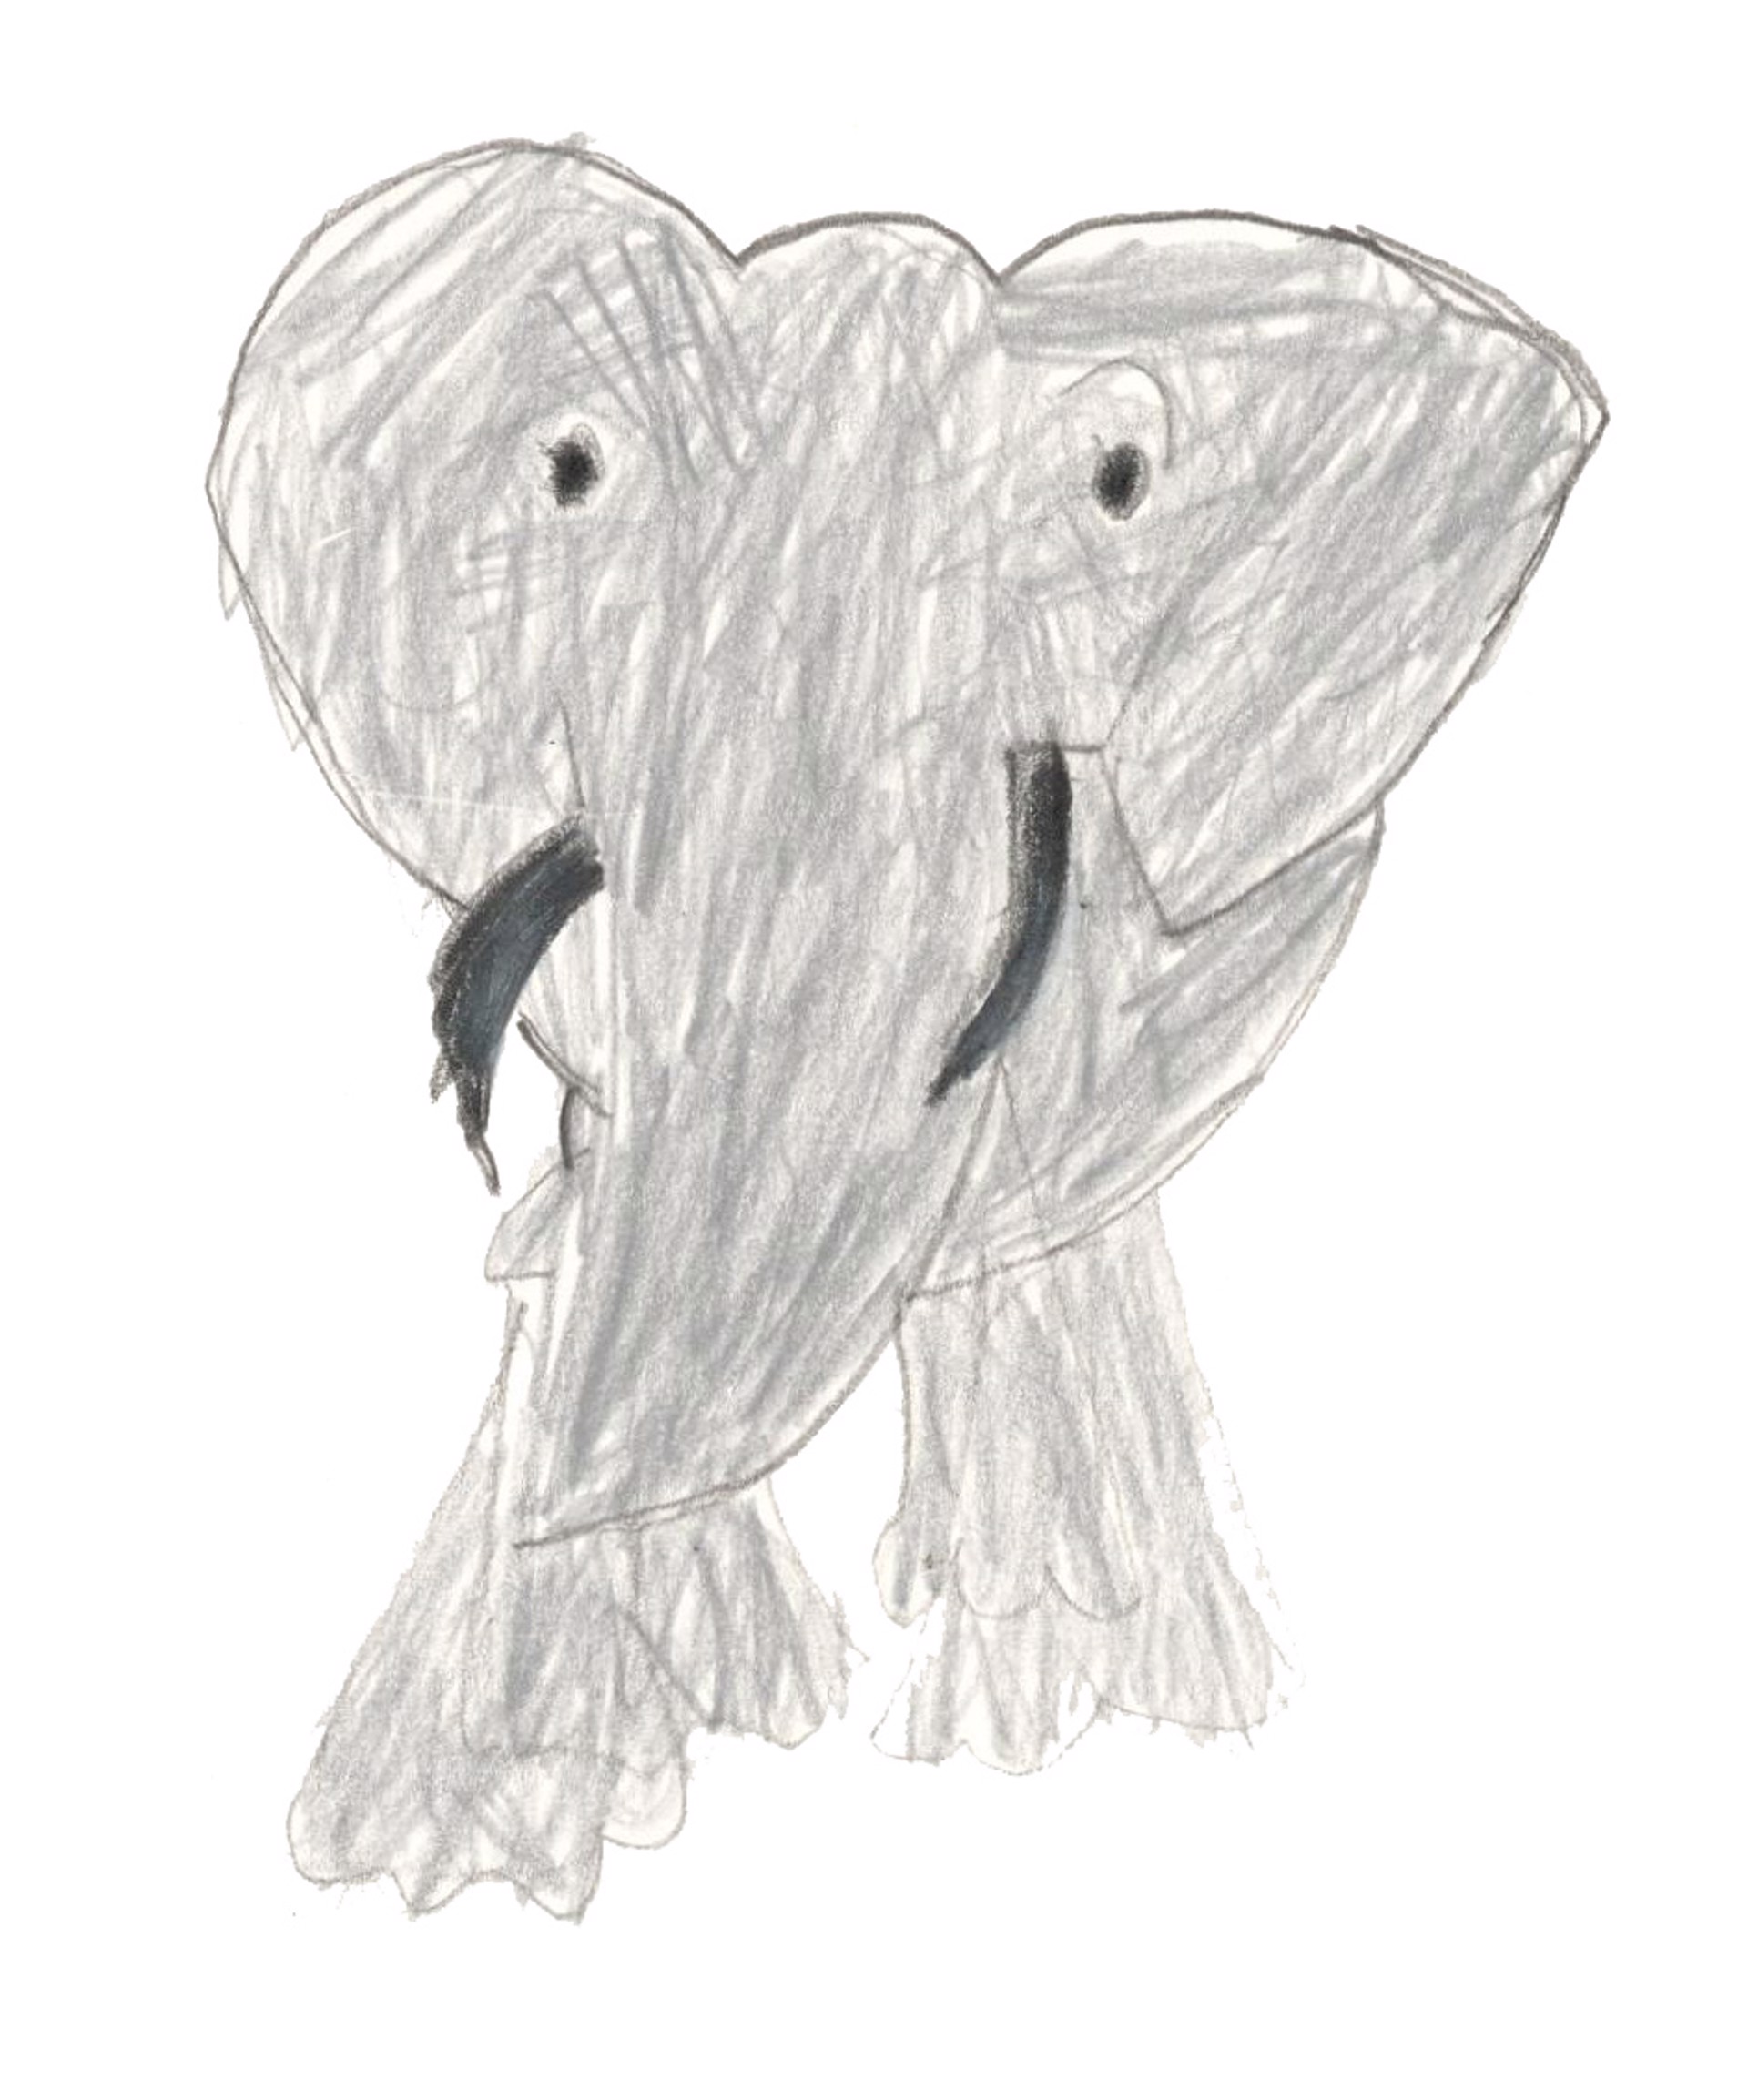 Elephant by Duane Blacksheare-Staton